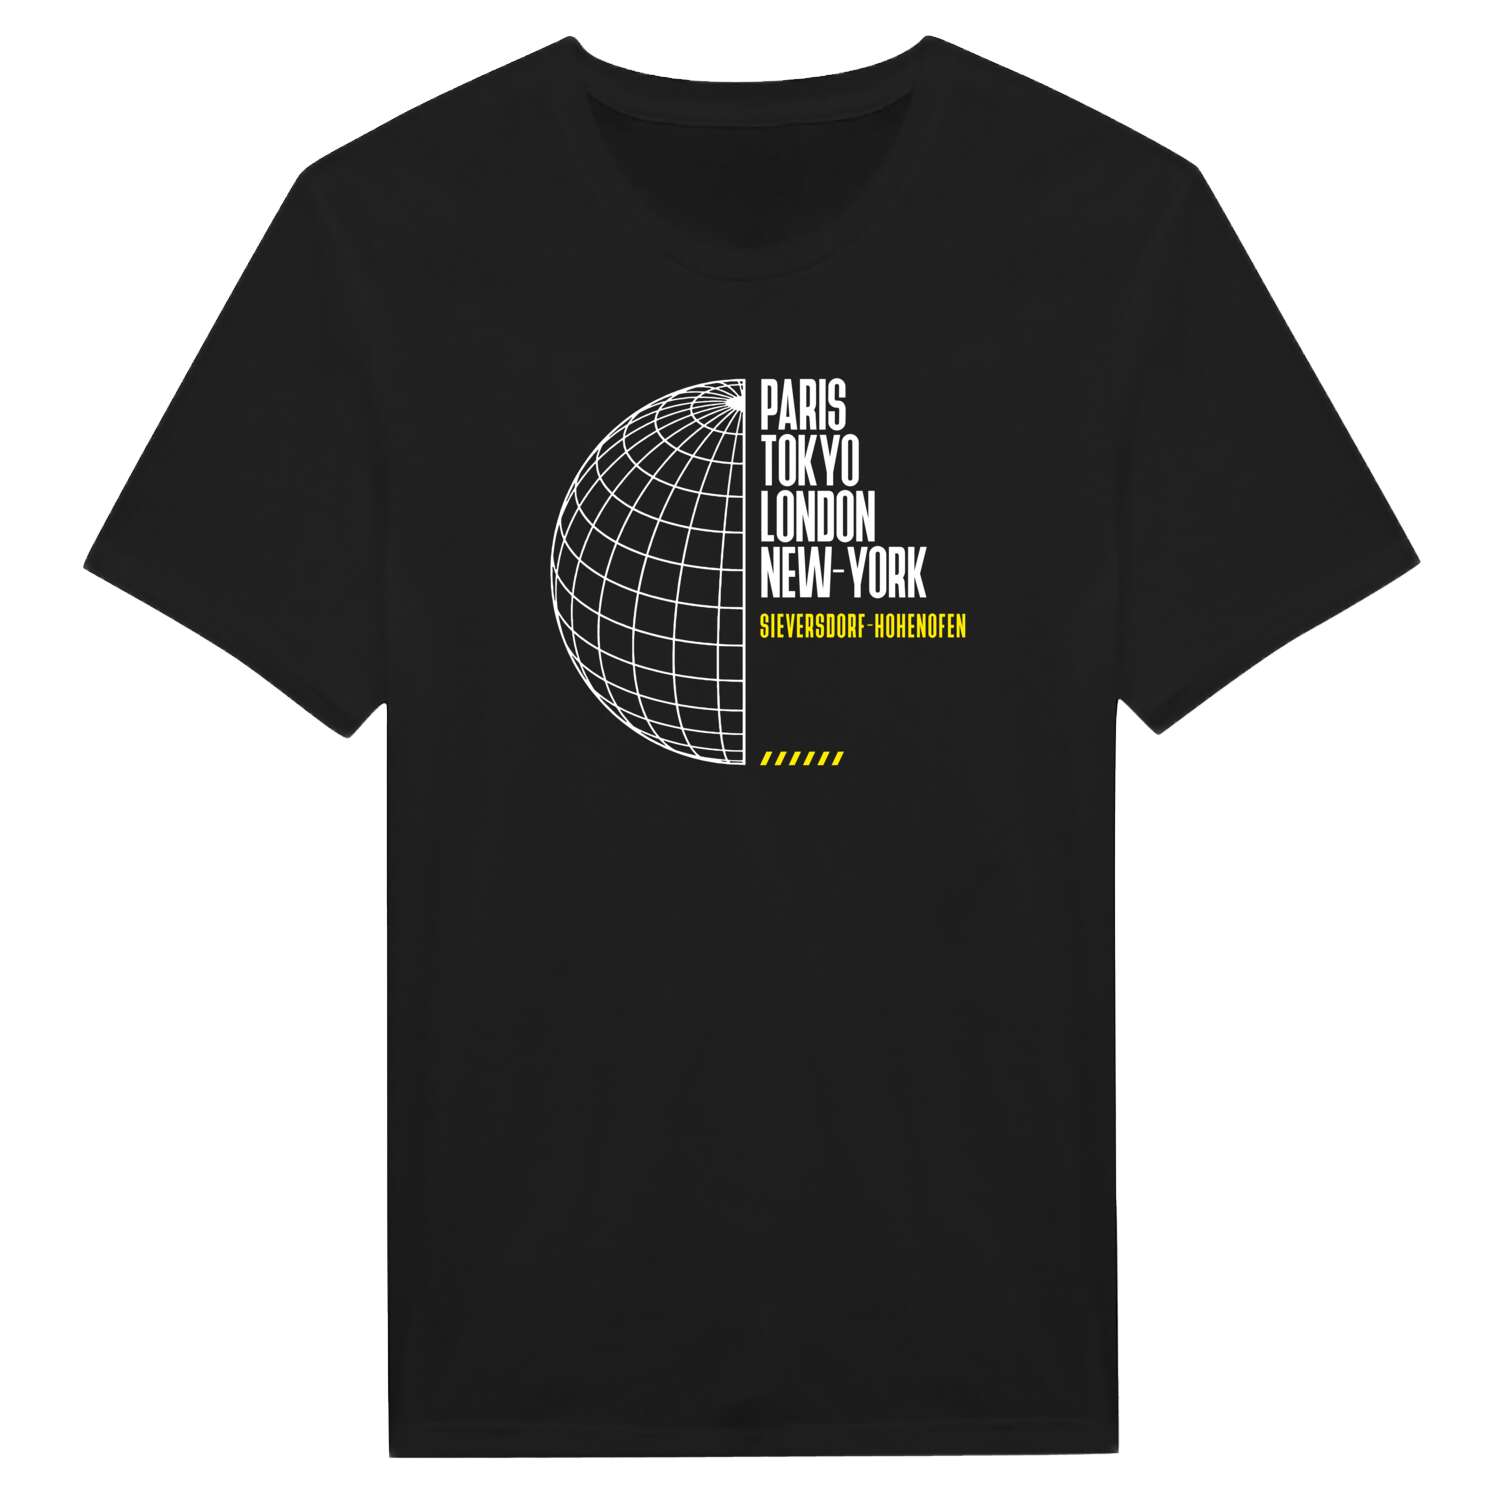 Sieversdorf-Hohenofen T-Shirt »Paris Tokyo London«